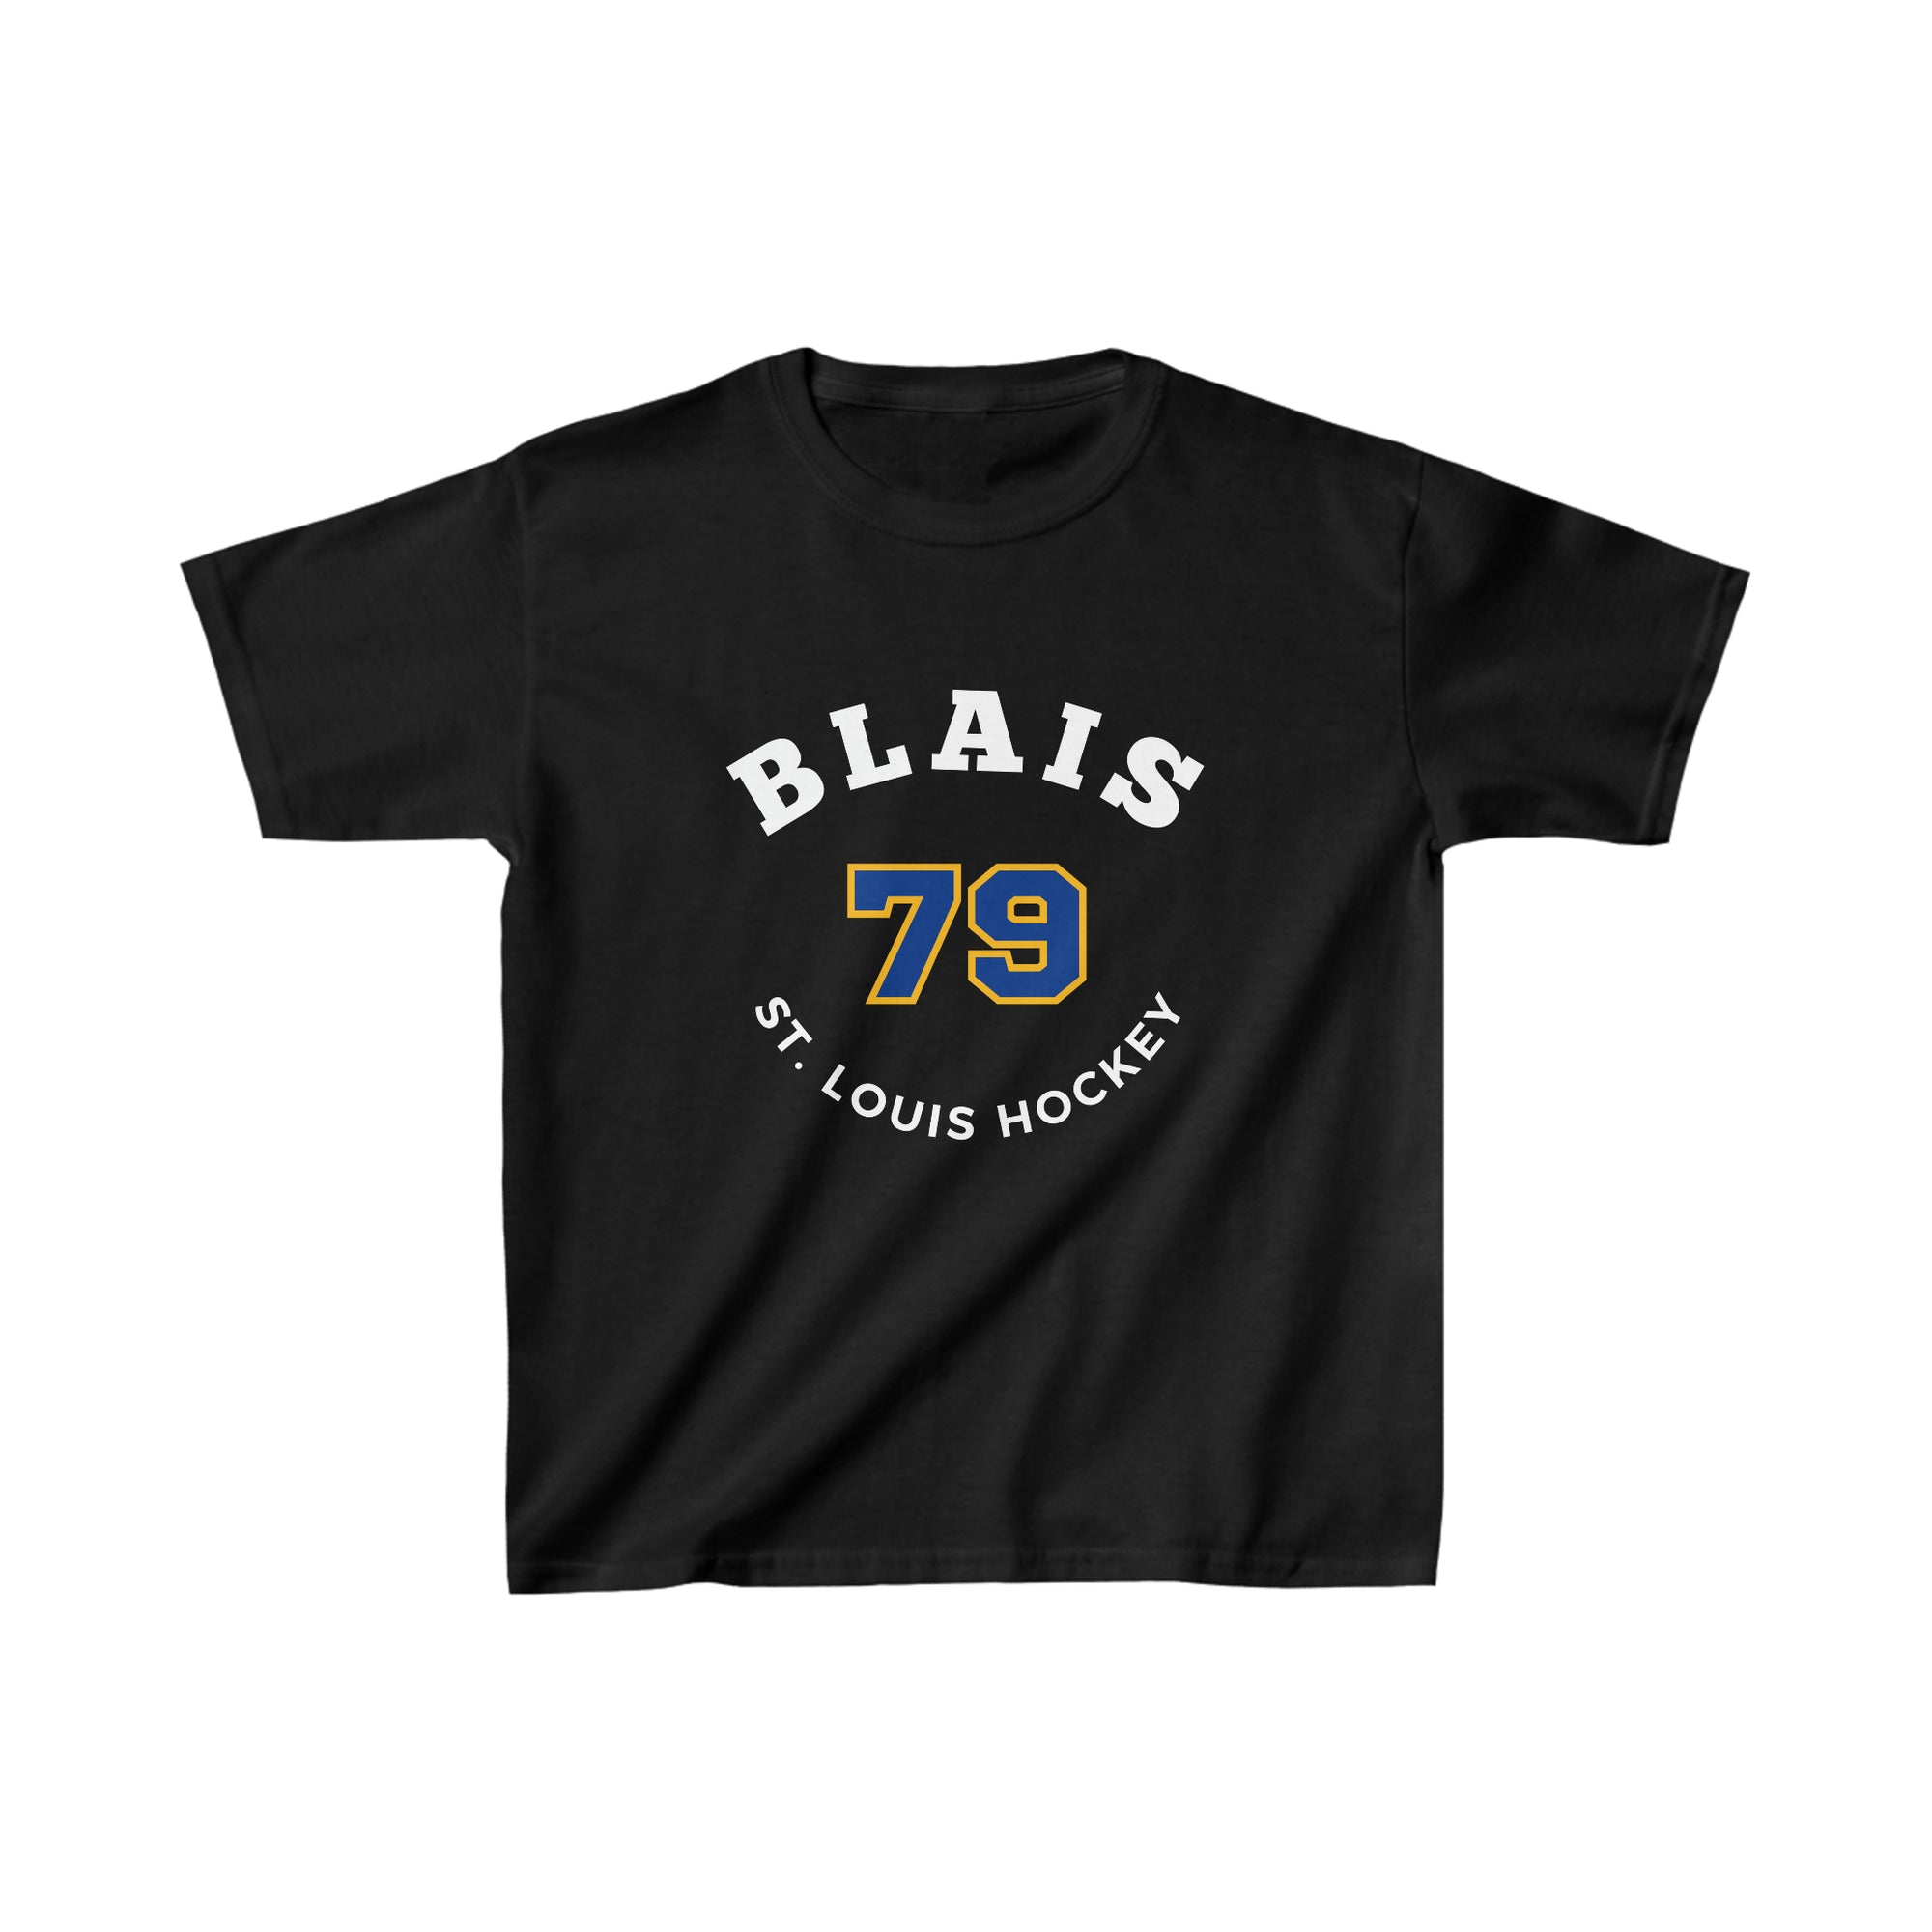 Blais 79 St. Louis Hockey Number Arch Design Kids Tee